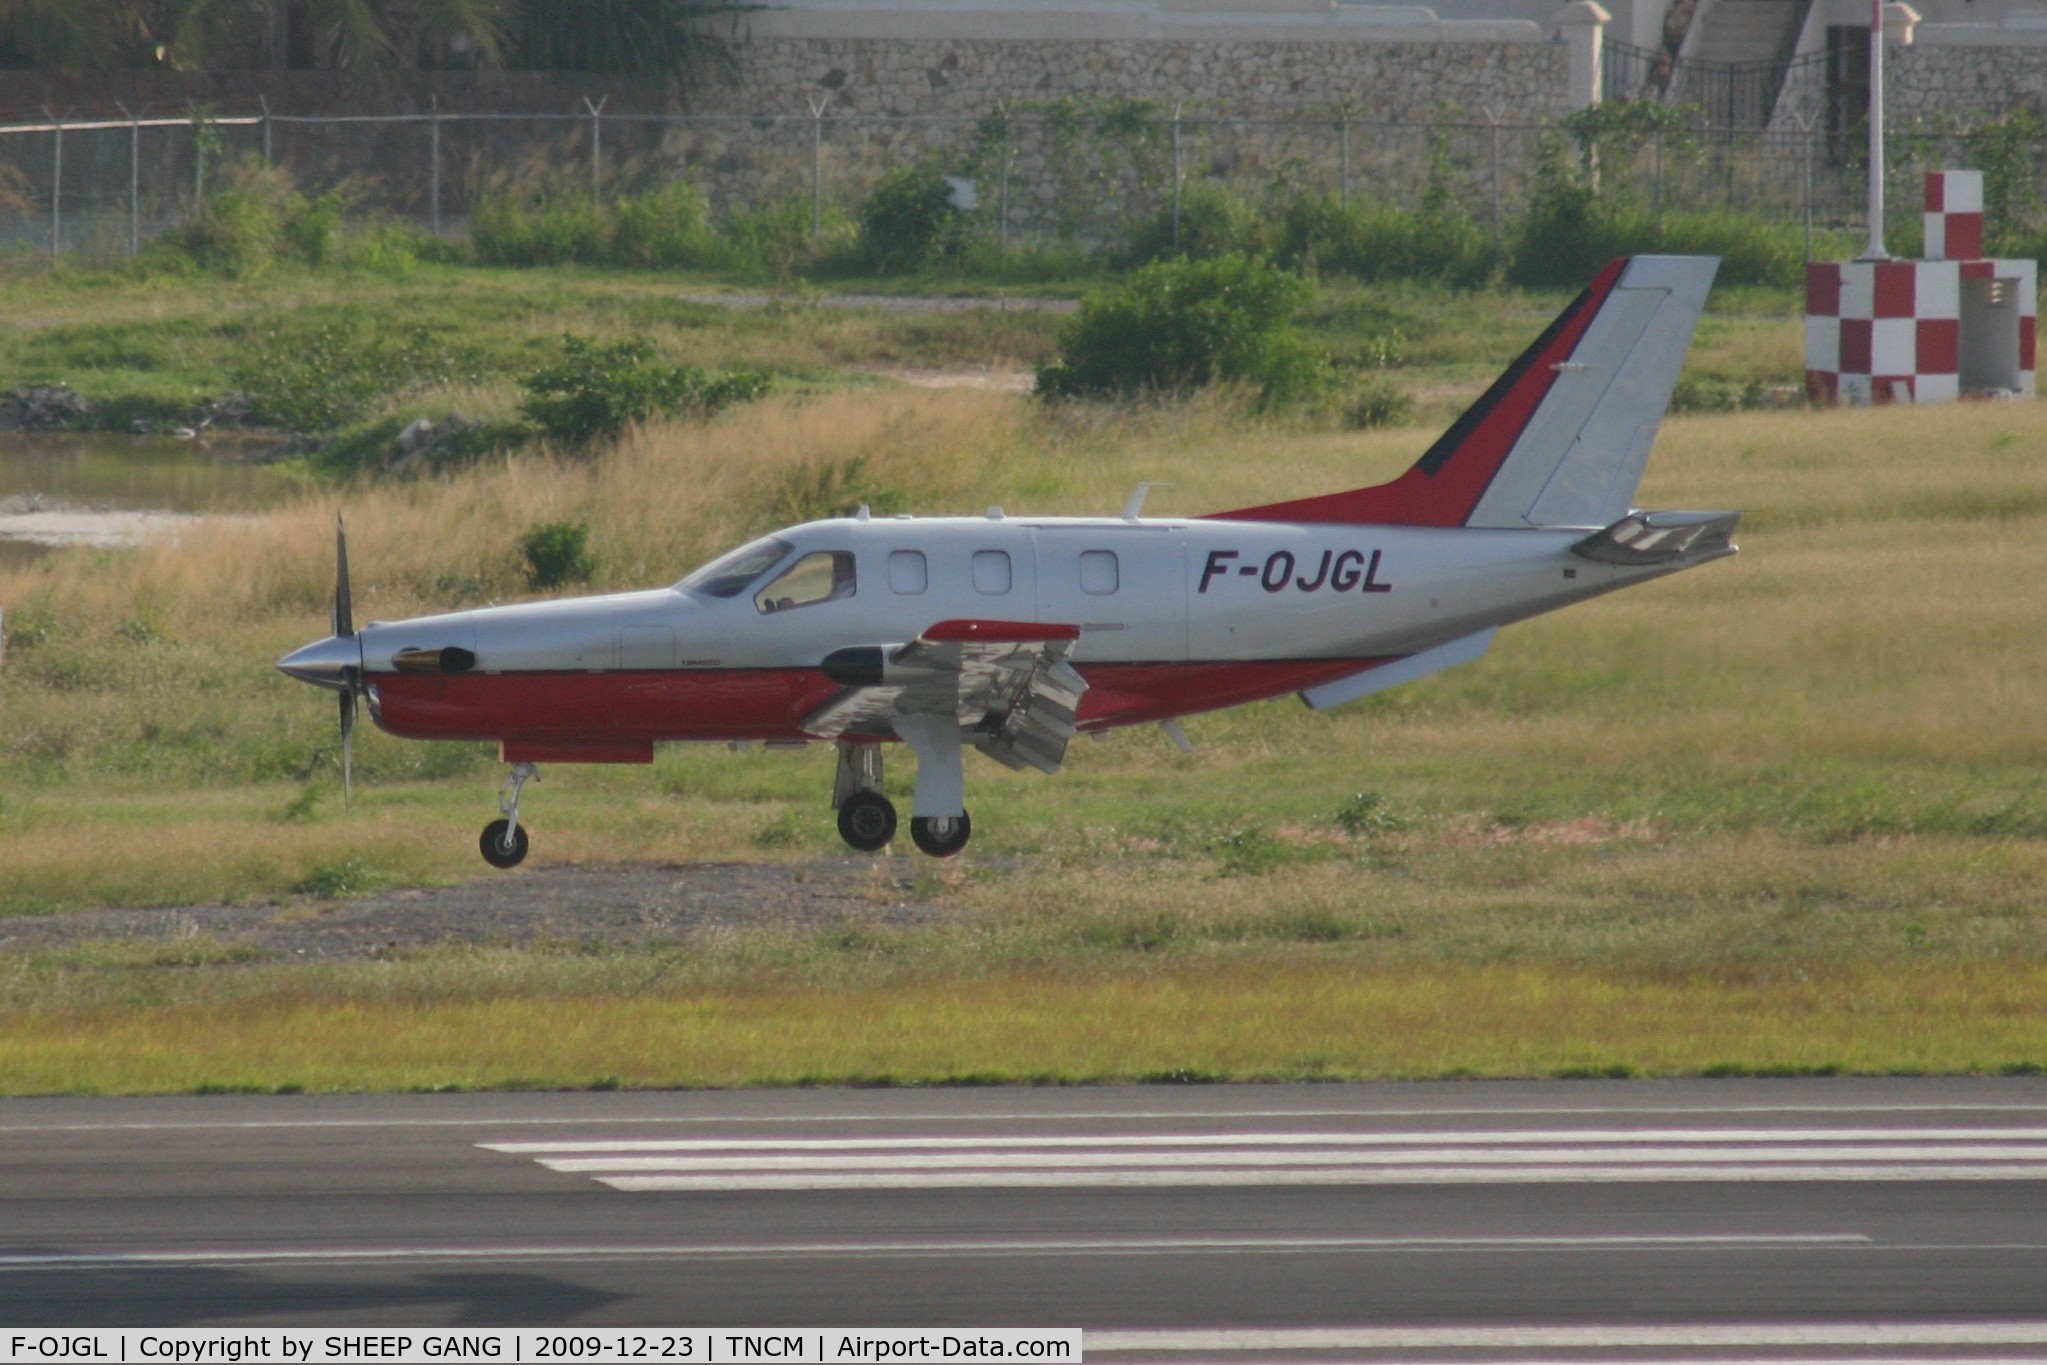 F-OJGL, 2008 Socata TBM-850 C/N 442, F-OJGL landing at TNCM